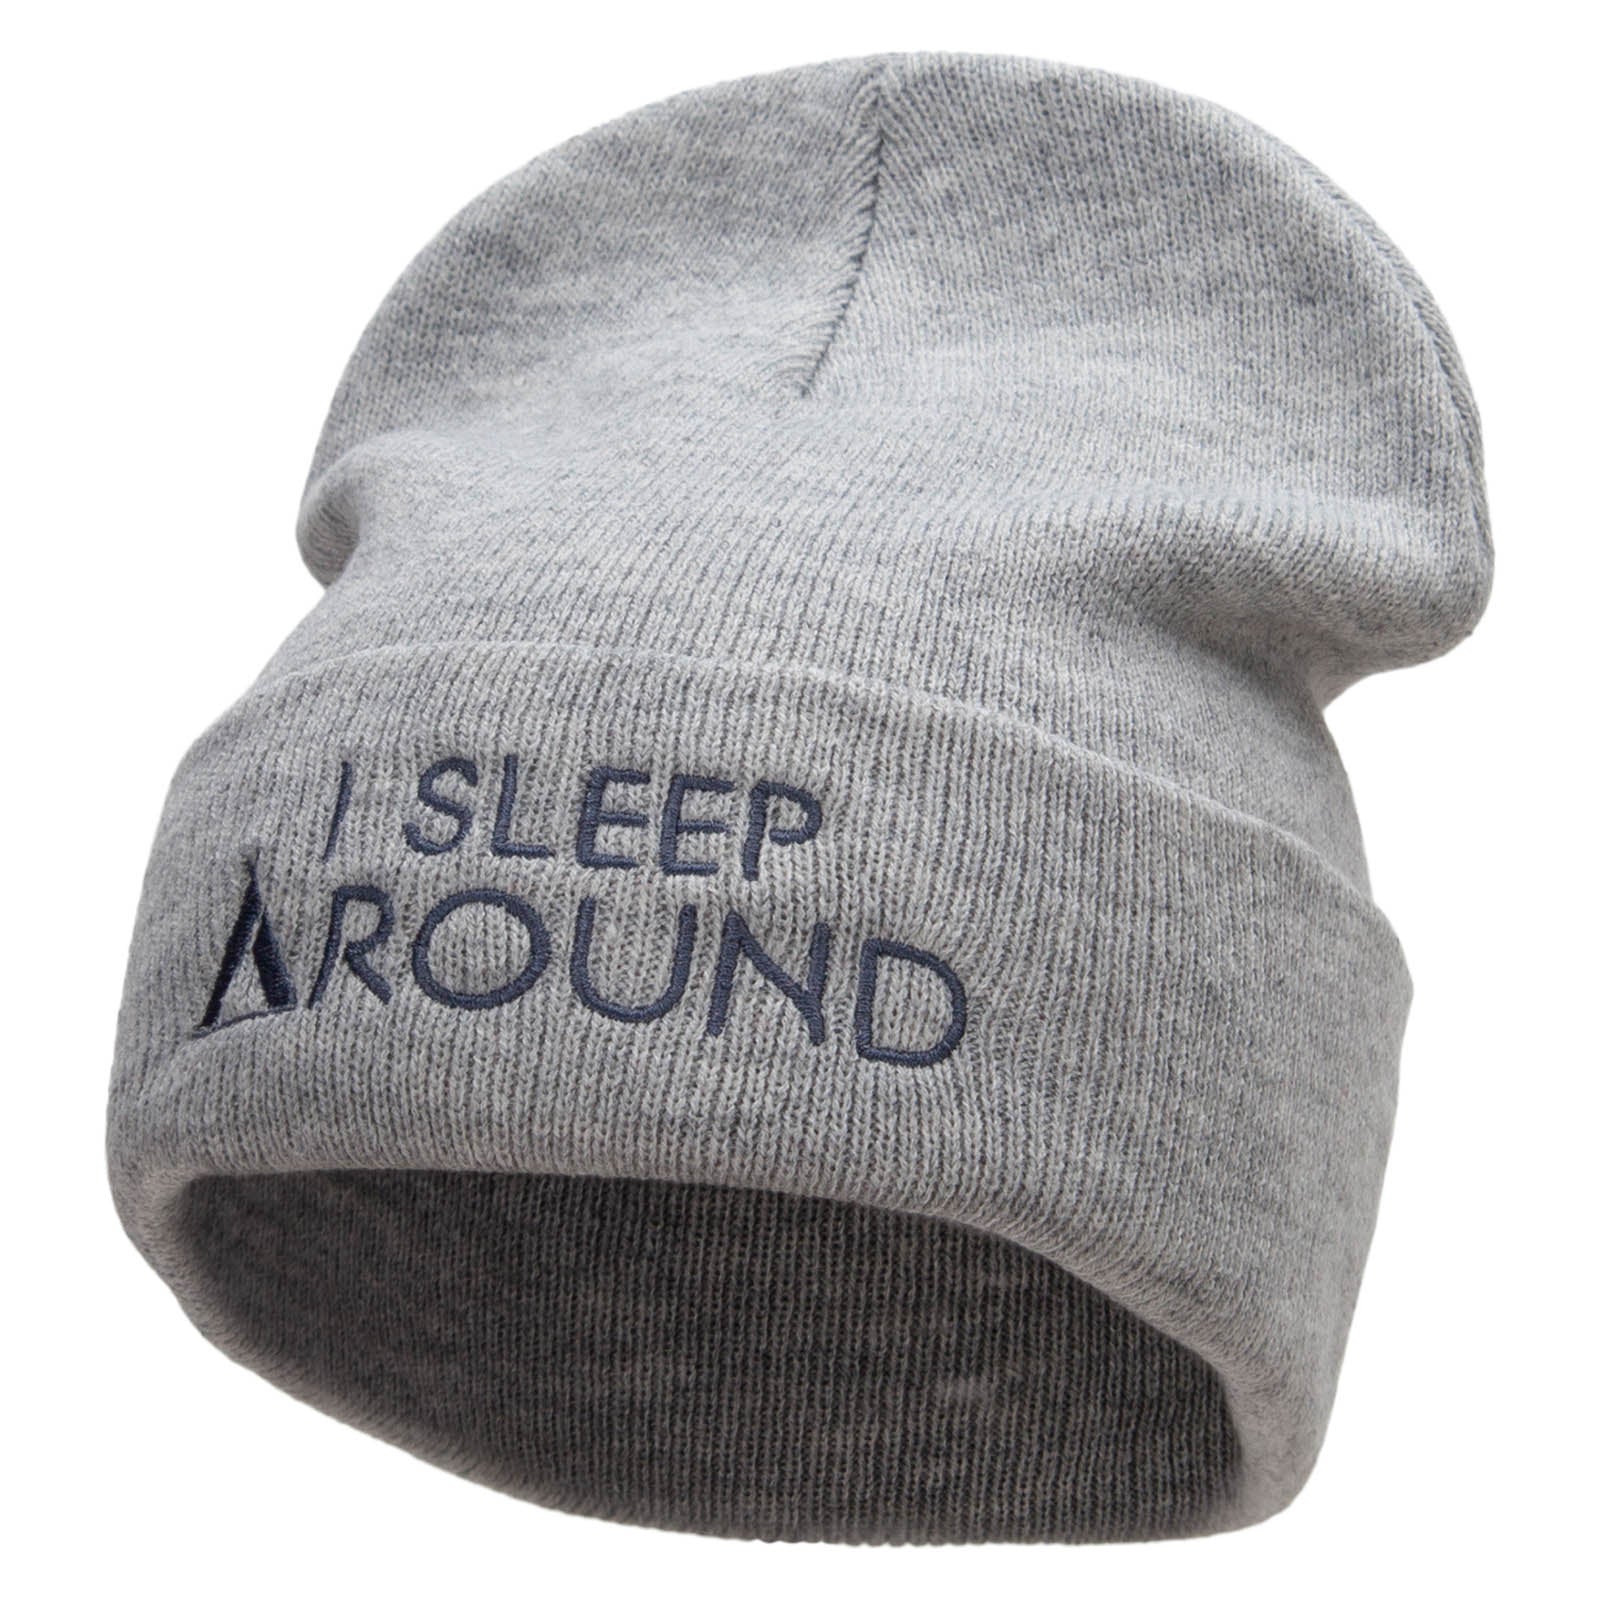 I Sleep Around Embroidered 12 Inch Long Knitted Beanie - Heather Grey OSFM